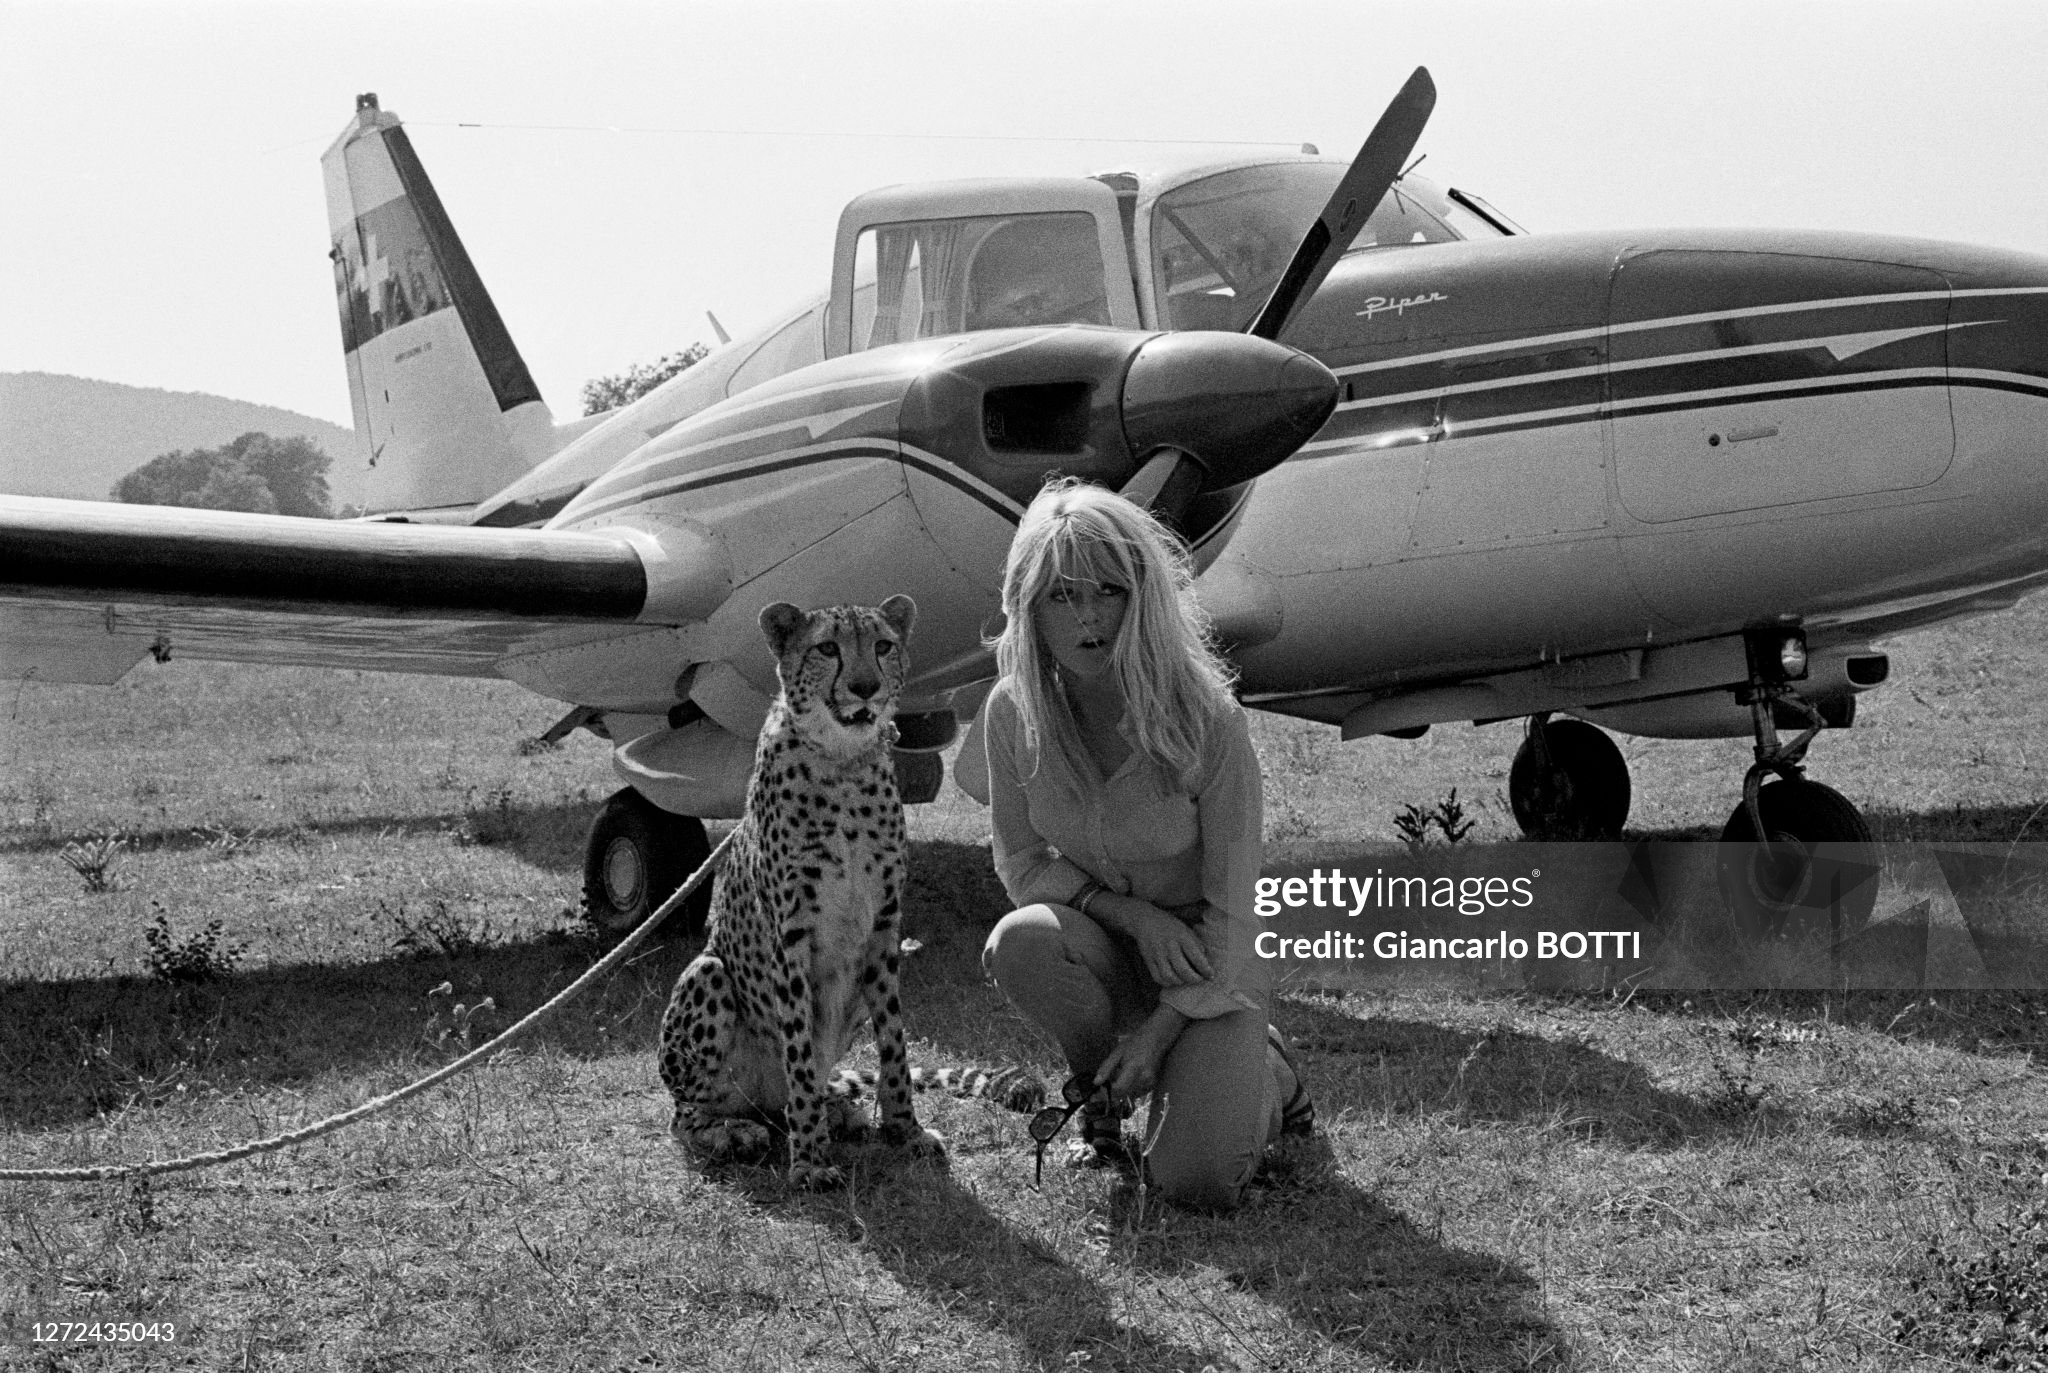 Brigitte Bardot with a cheetah next to a Piper aircraft in August 1966.